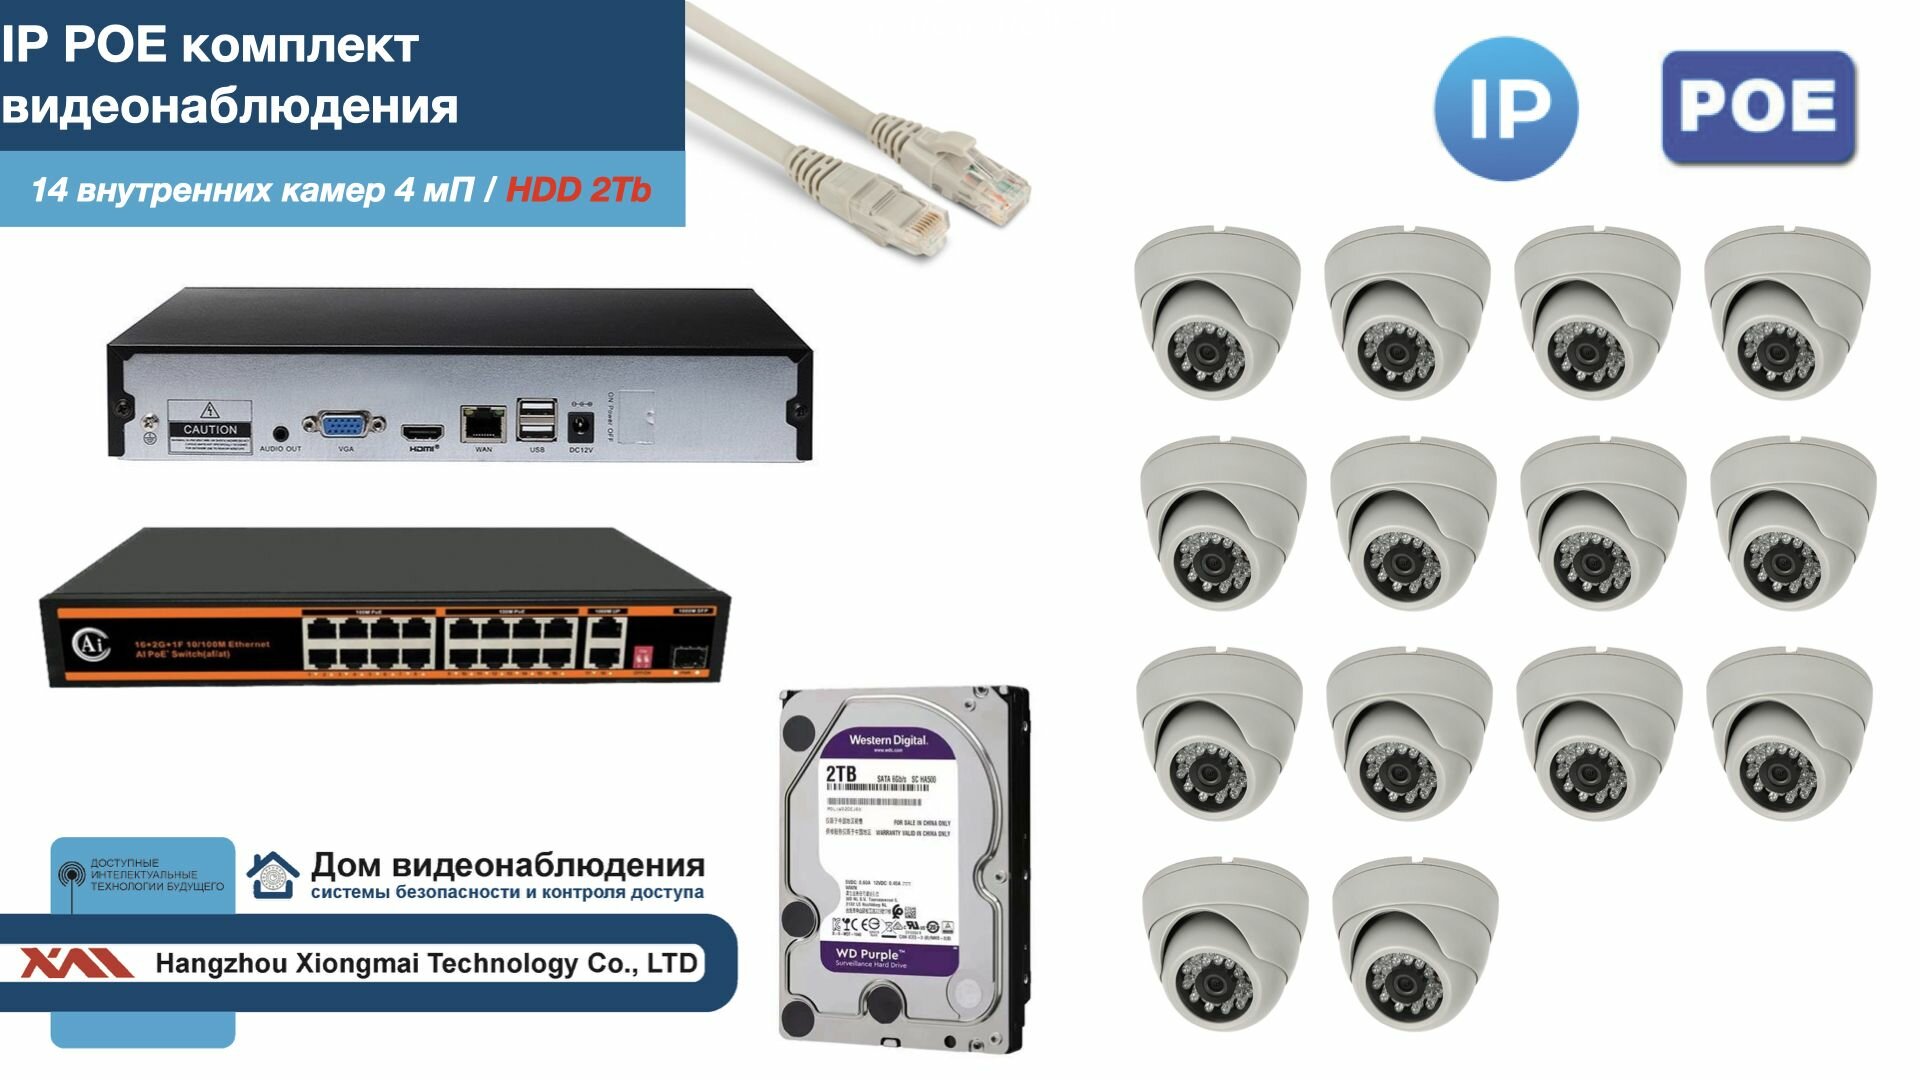 Полный IP POE комплект видеонаблюдения на 14 камер (KIT14IPPOE300W4MP-HDD2Tb)